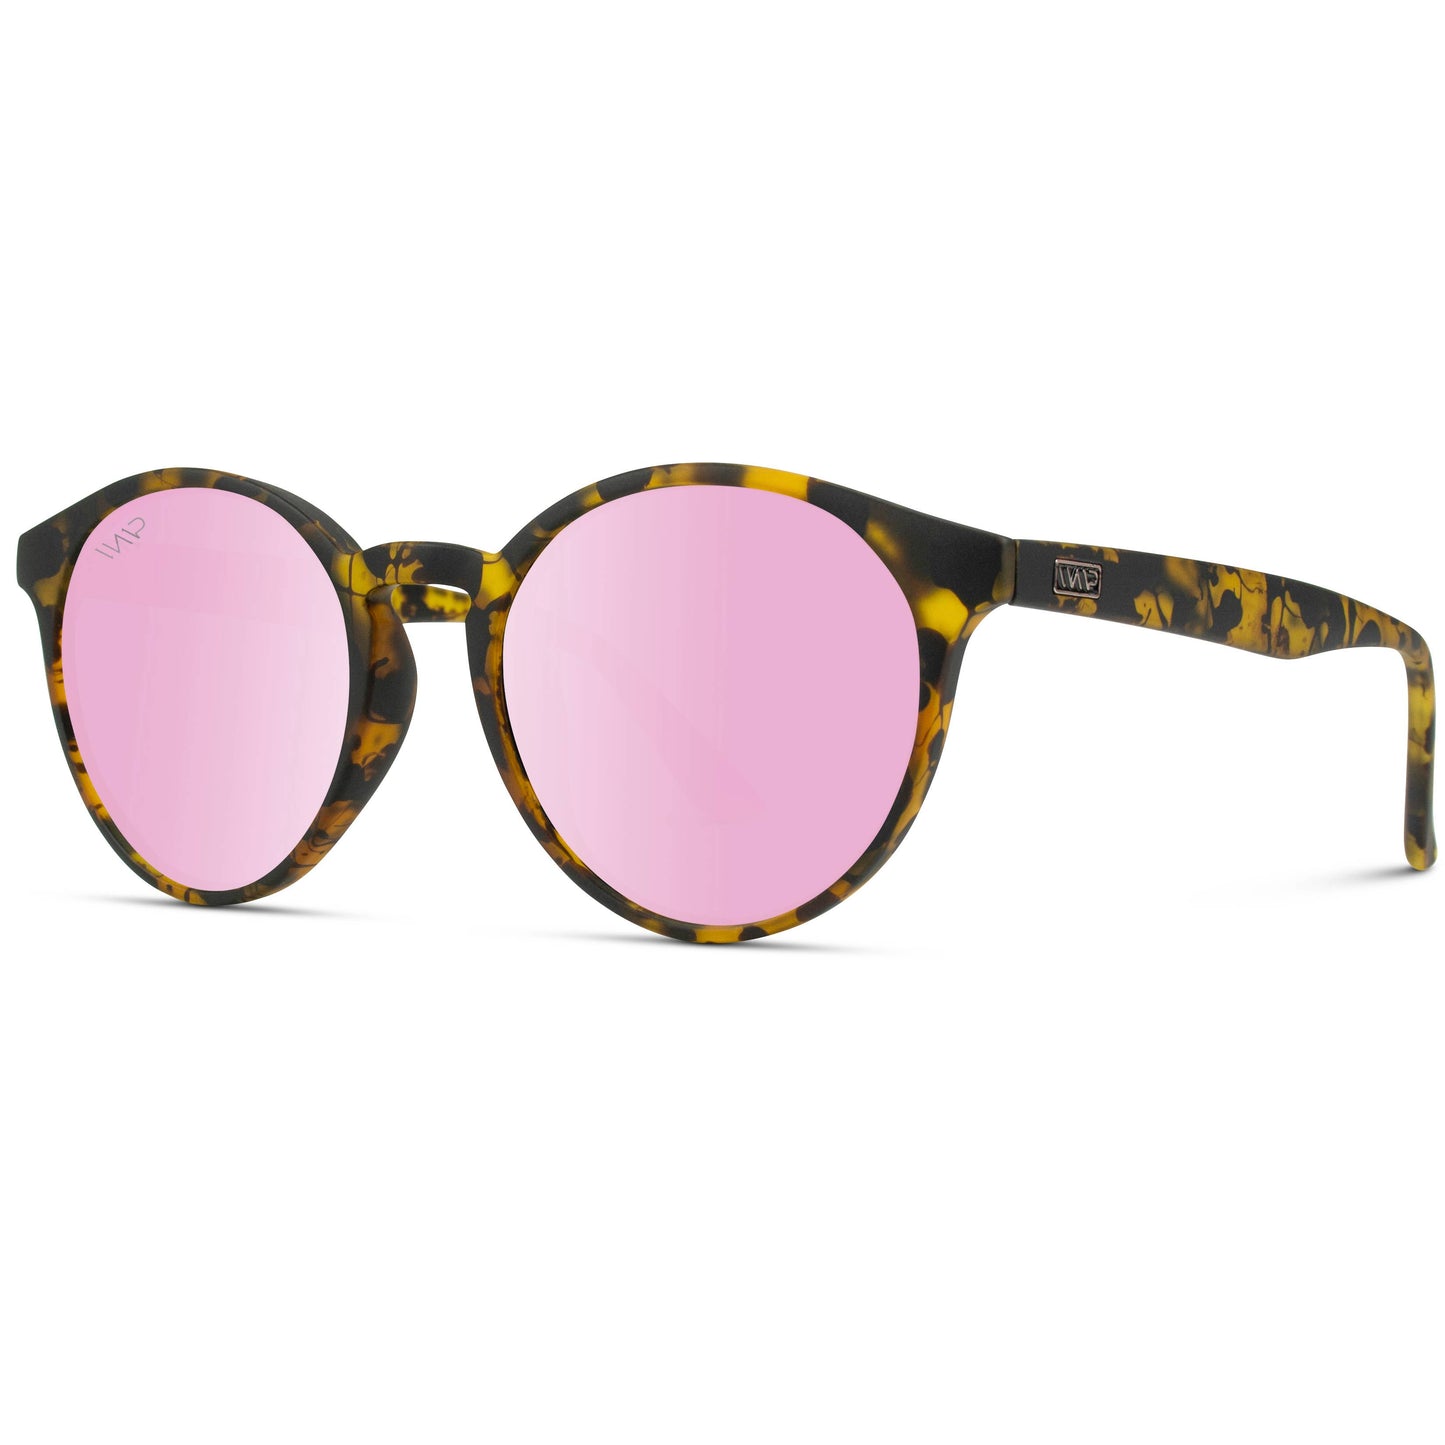 Clove - Round Classic Retro Frame Sunglasses | Tortoise Frame/Mirror Pink Lens